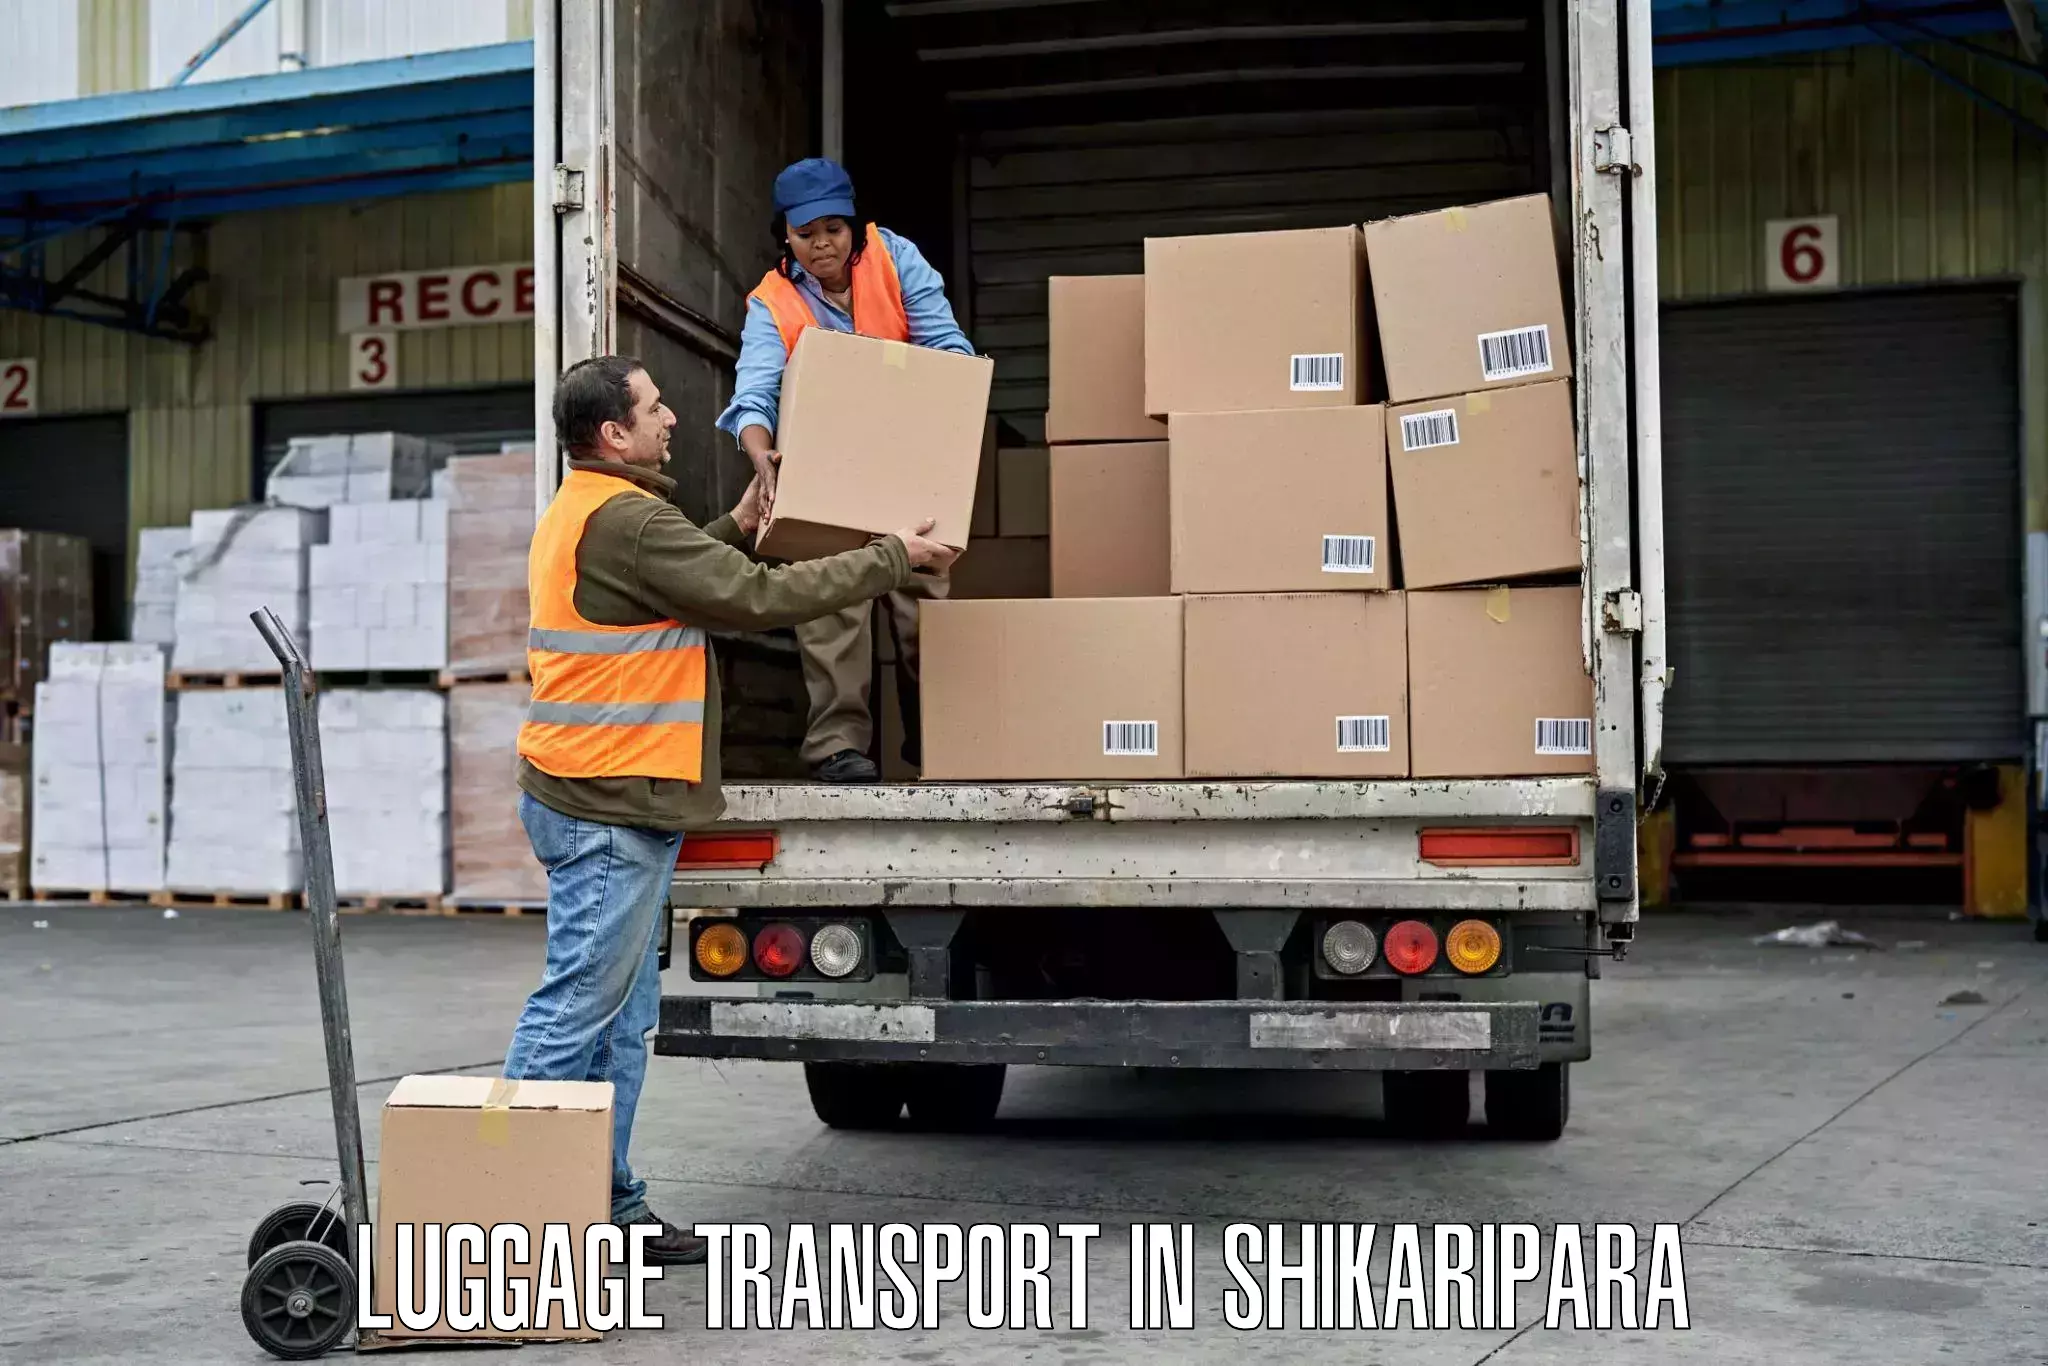 Luggage transport consultancy in Shikaripara